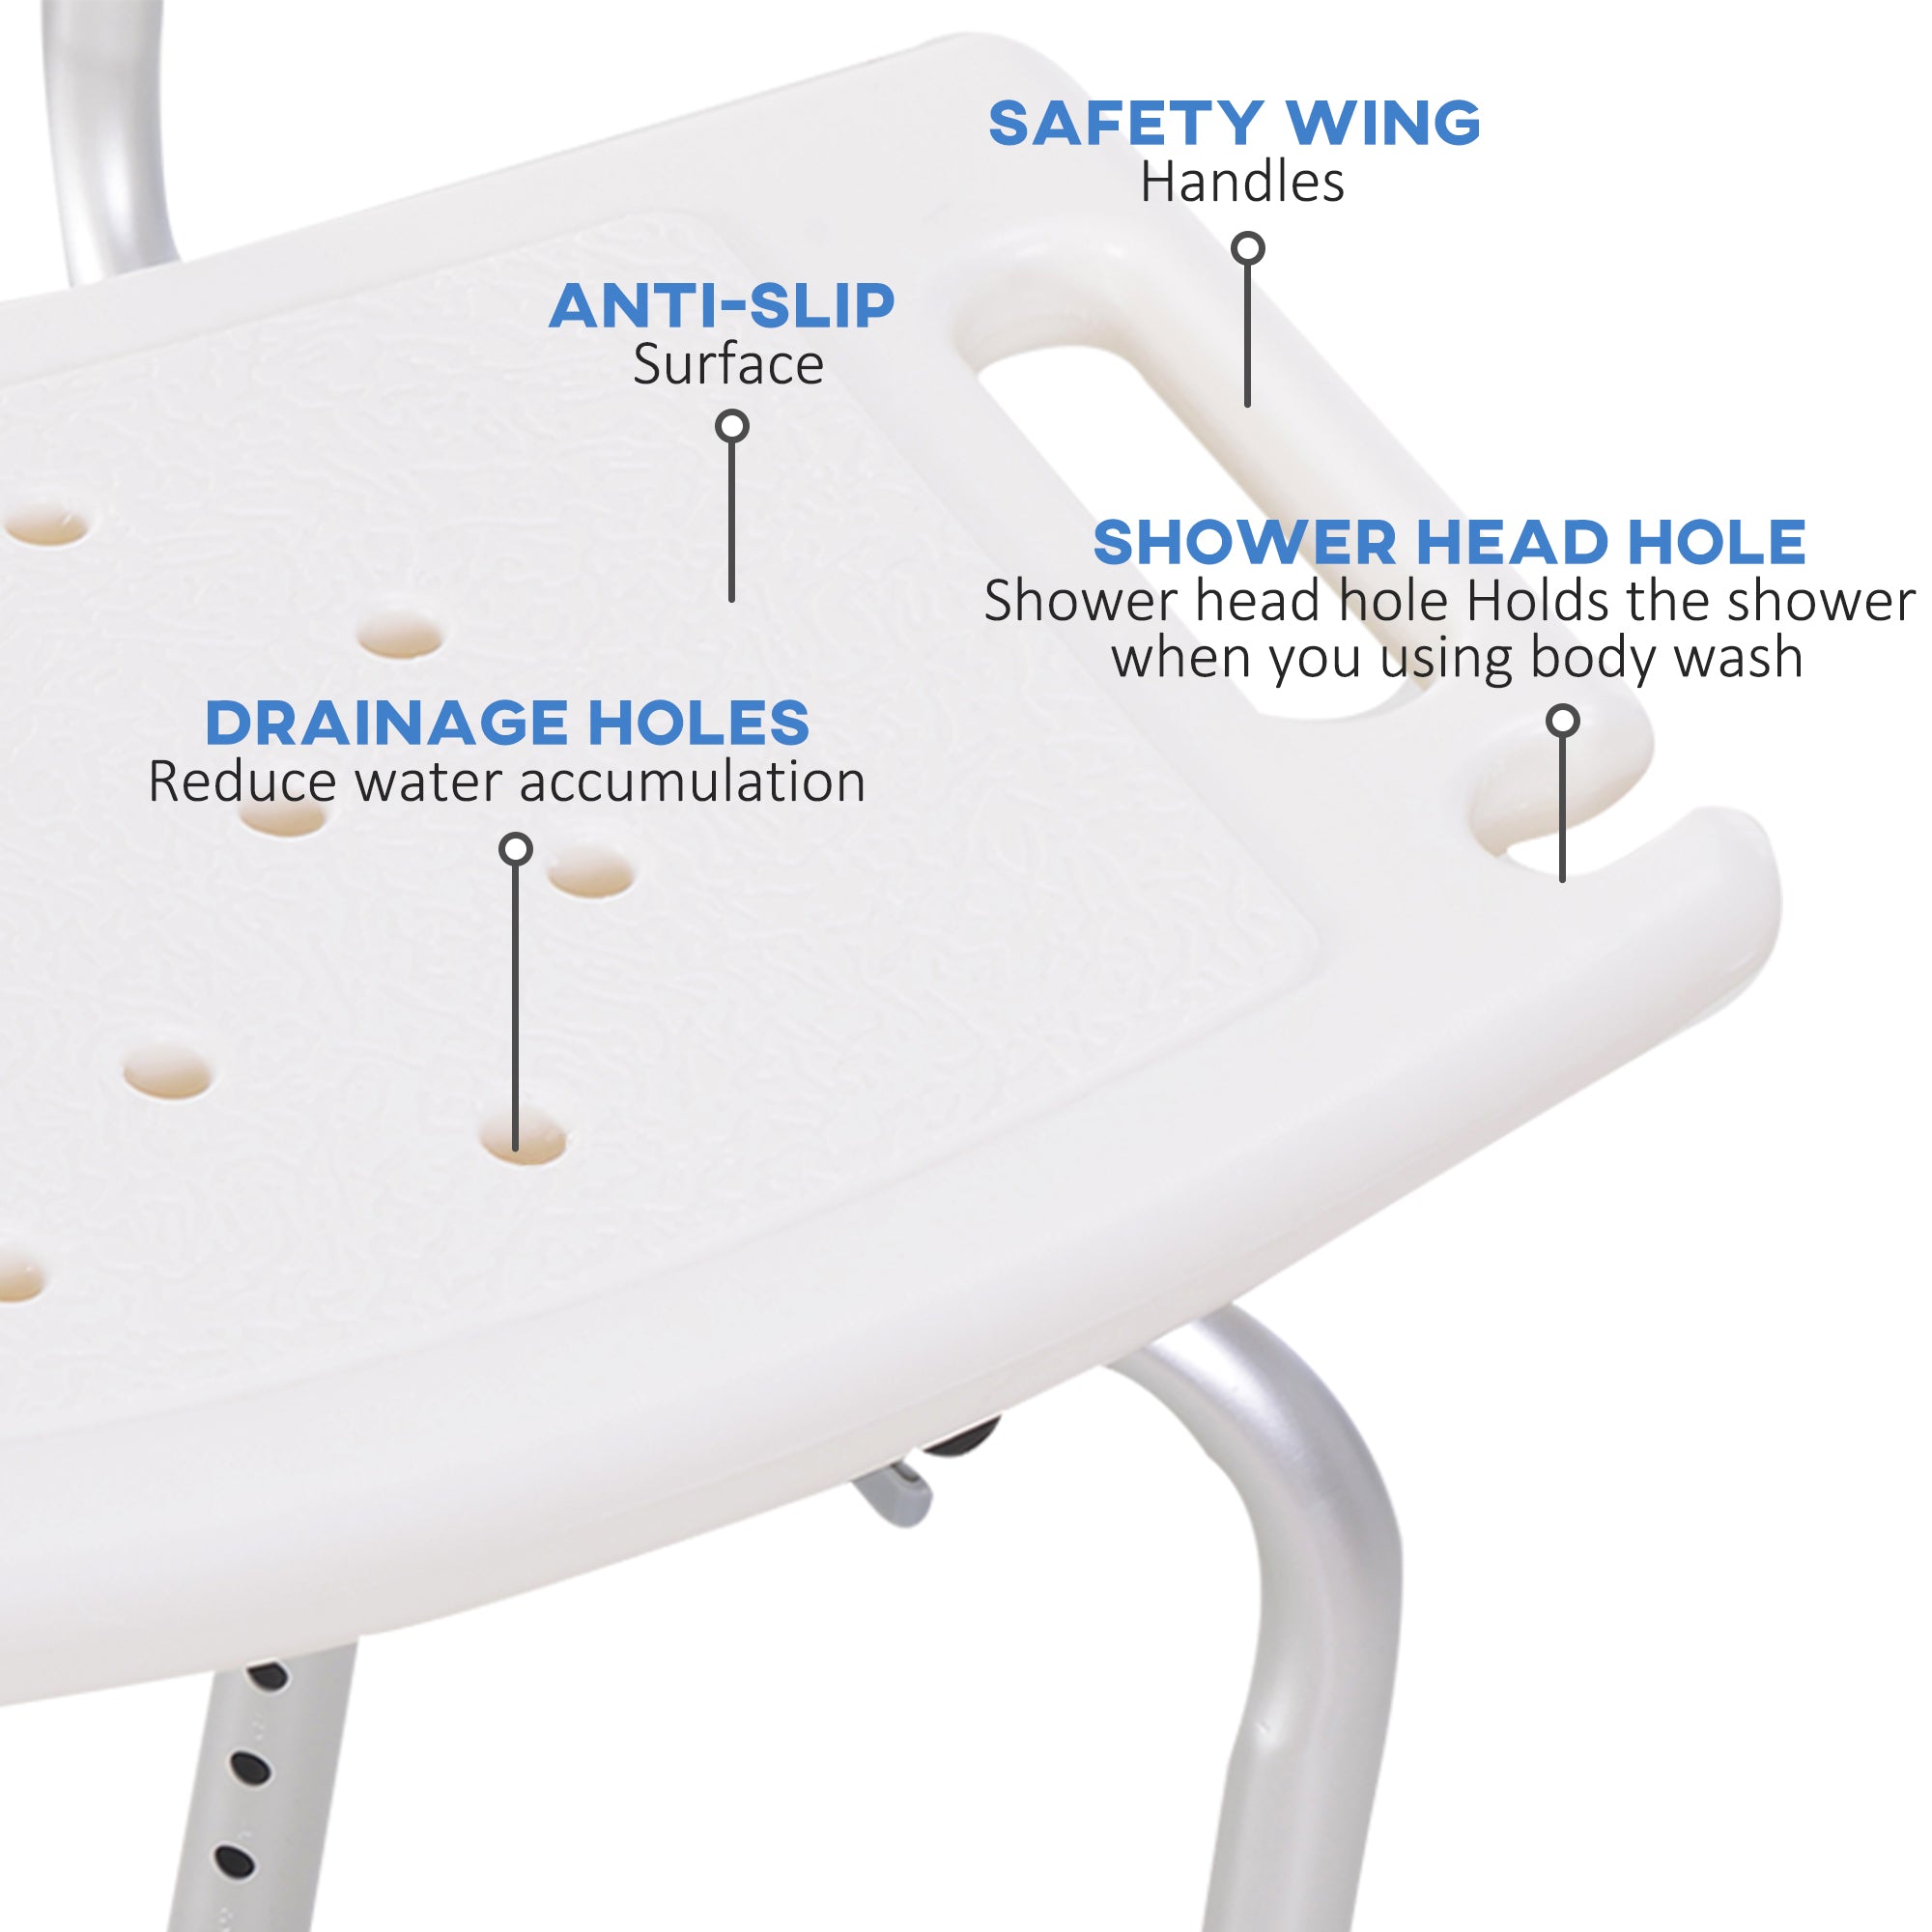 HOMCOM Bath Chair Shower Stool Safety Seat Bathroom Adjustable Positions Elderly Aids - Inspirely